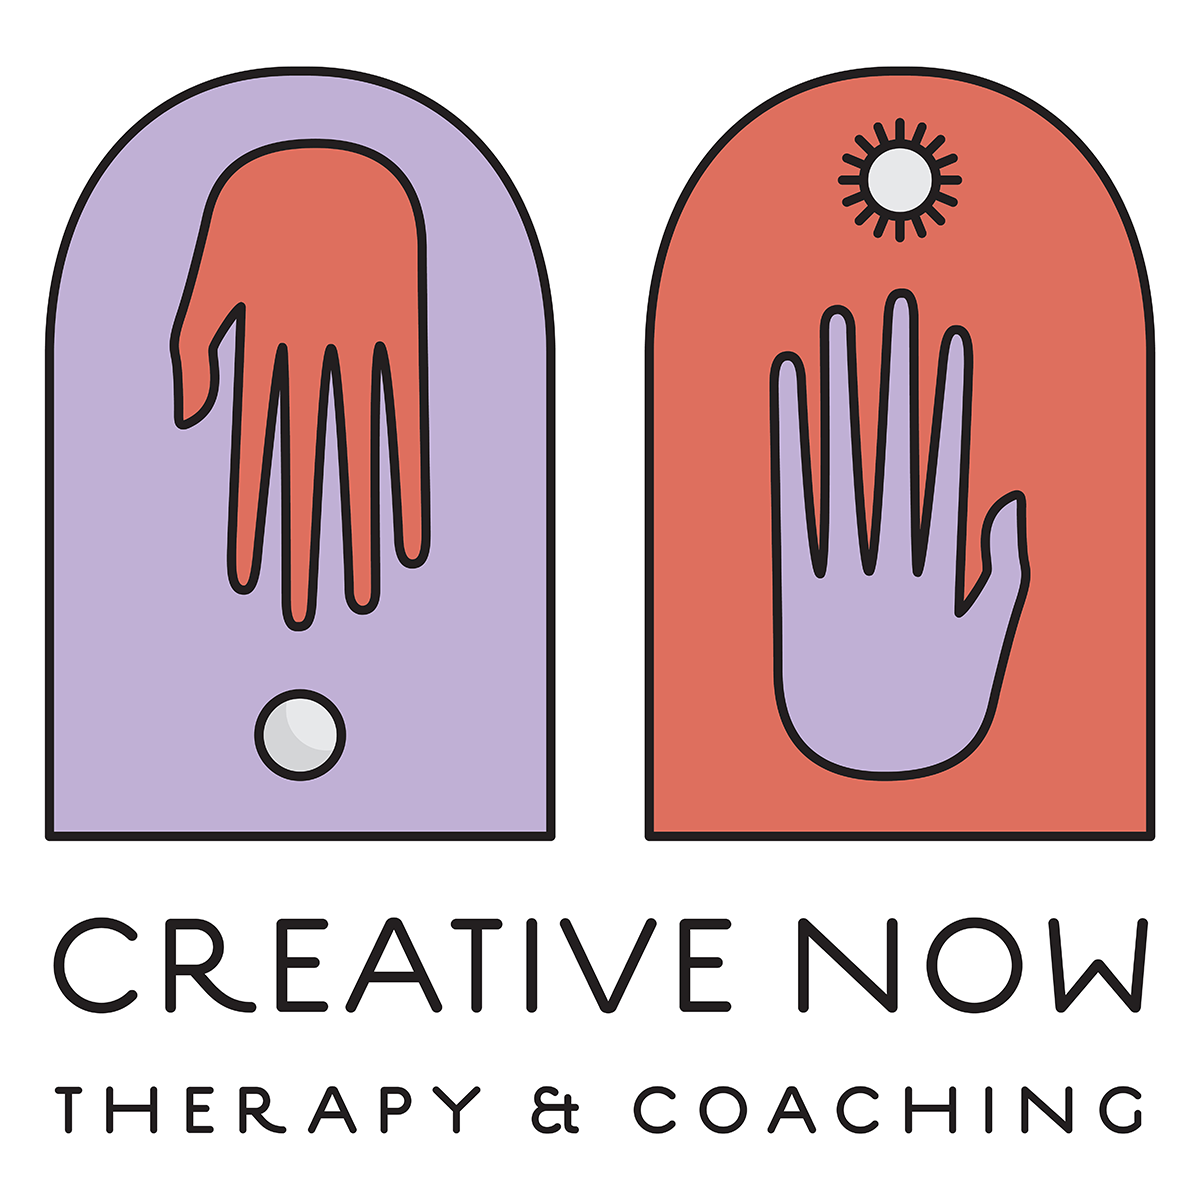 A (hopefully) useful psychotherapy resource & blog.